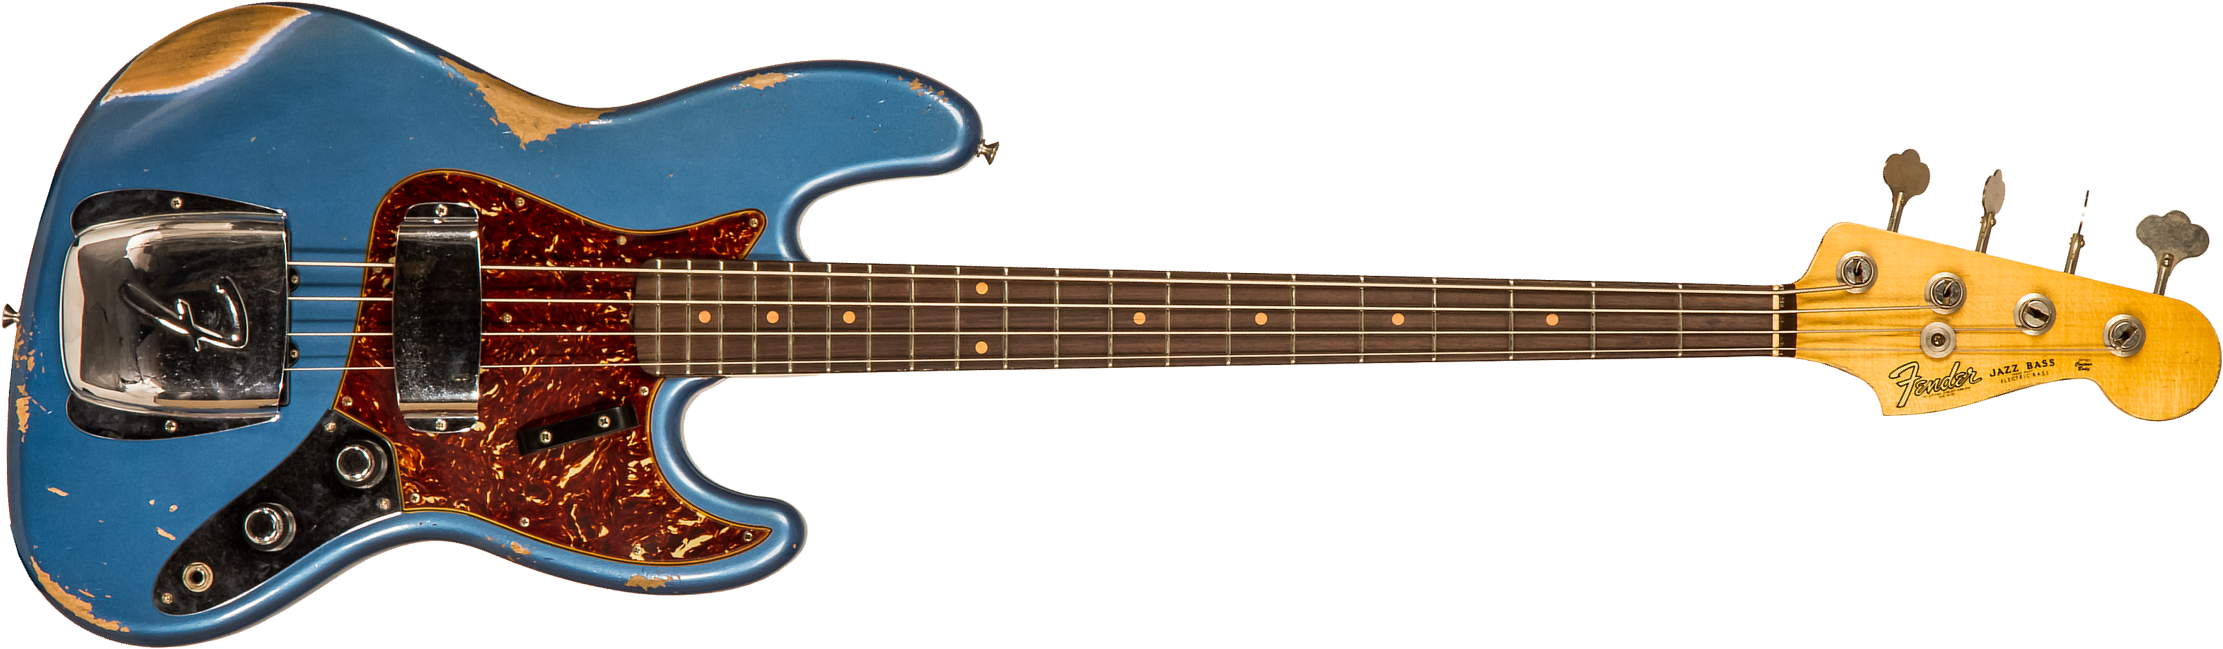 Fender Custom Shop Jazz Bass 1961 Rw #cz556667 - Heavy Relic Lake Placid Blue - Solidbody E-bass - Main picture